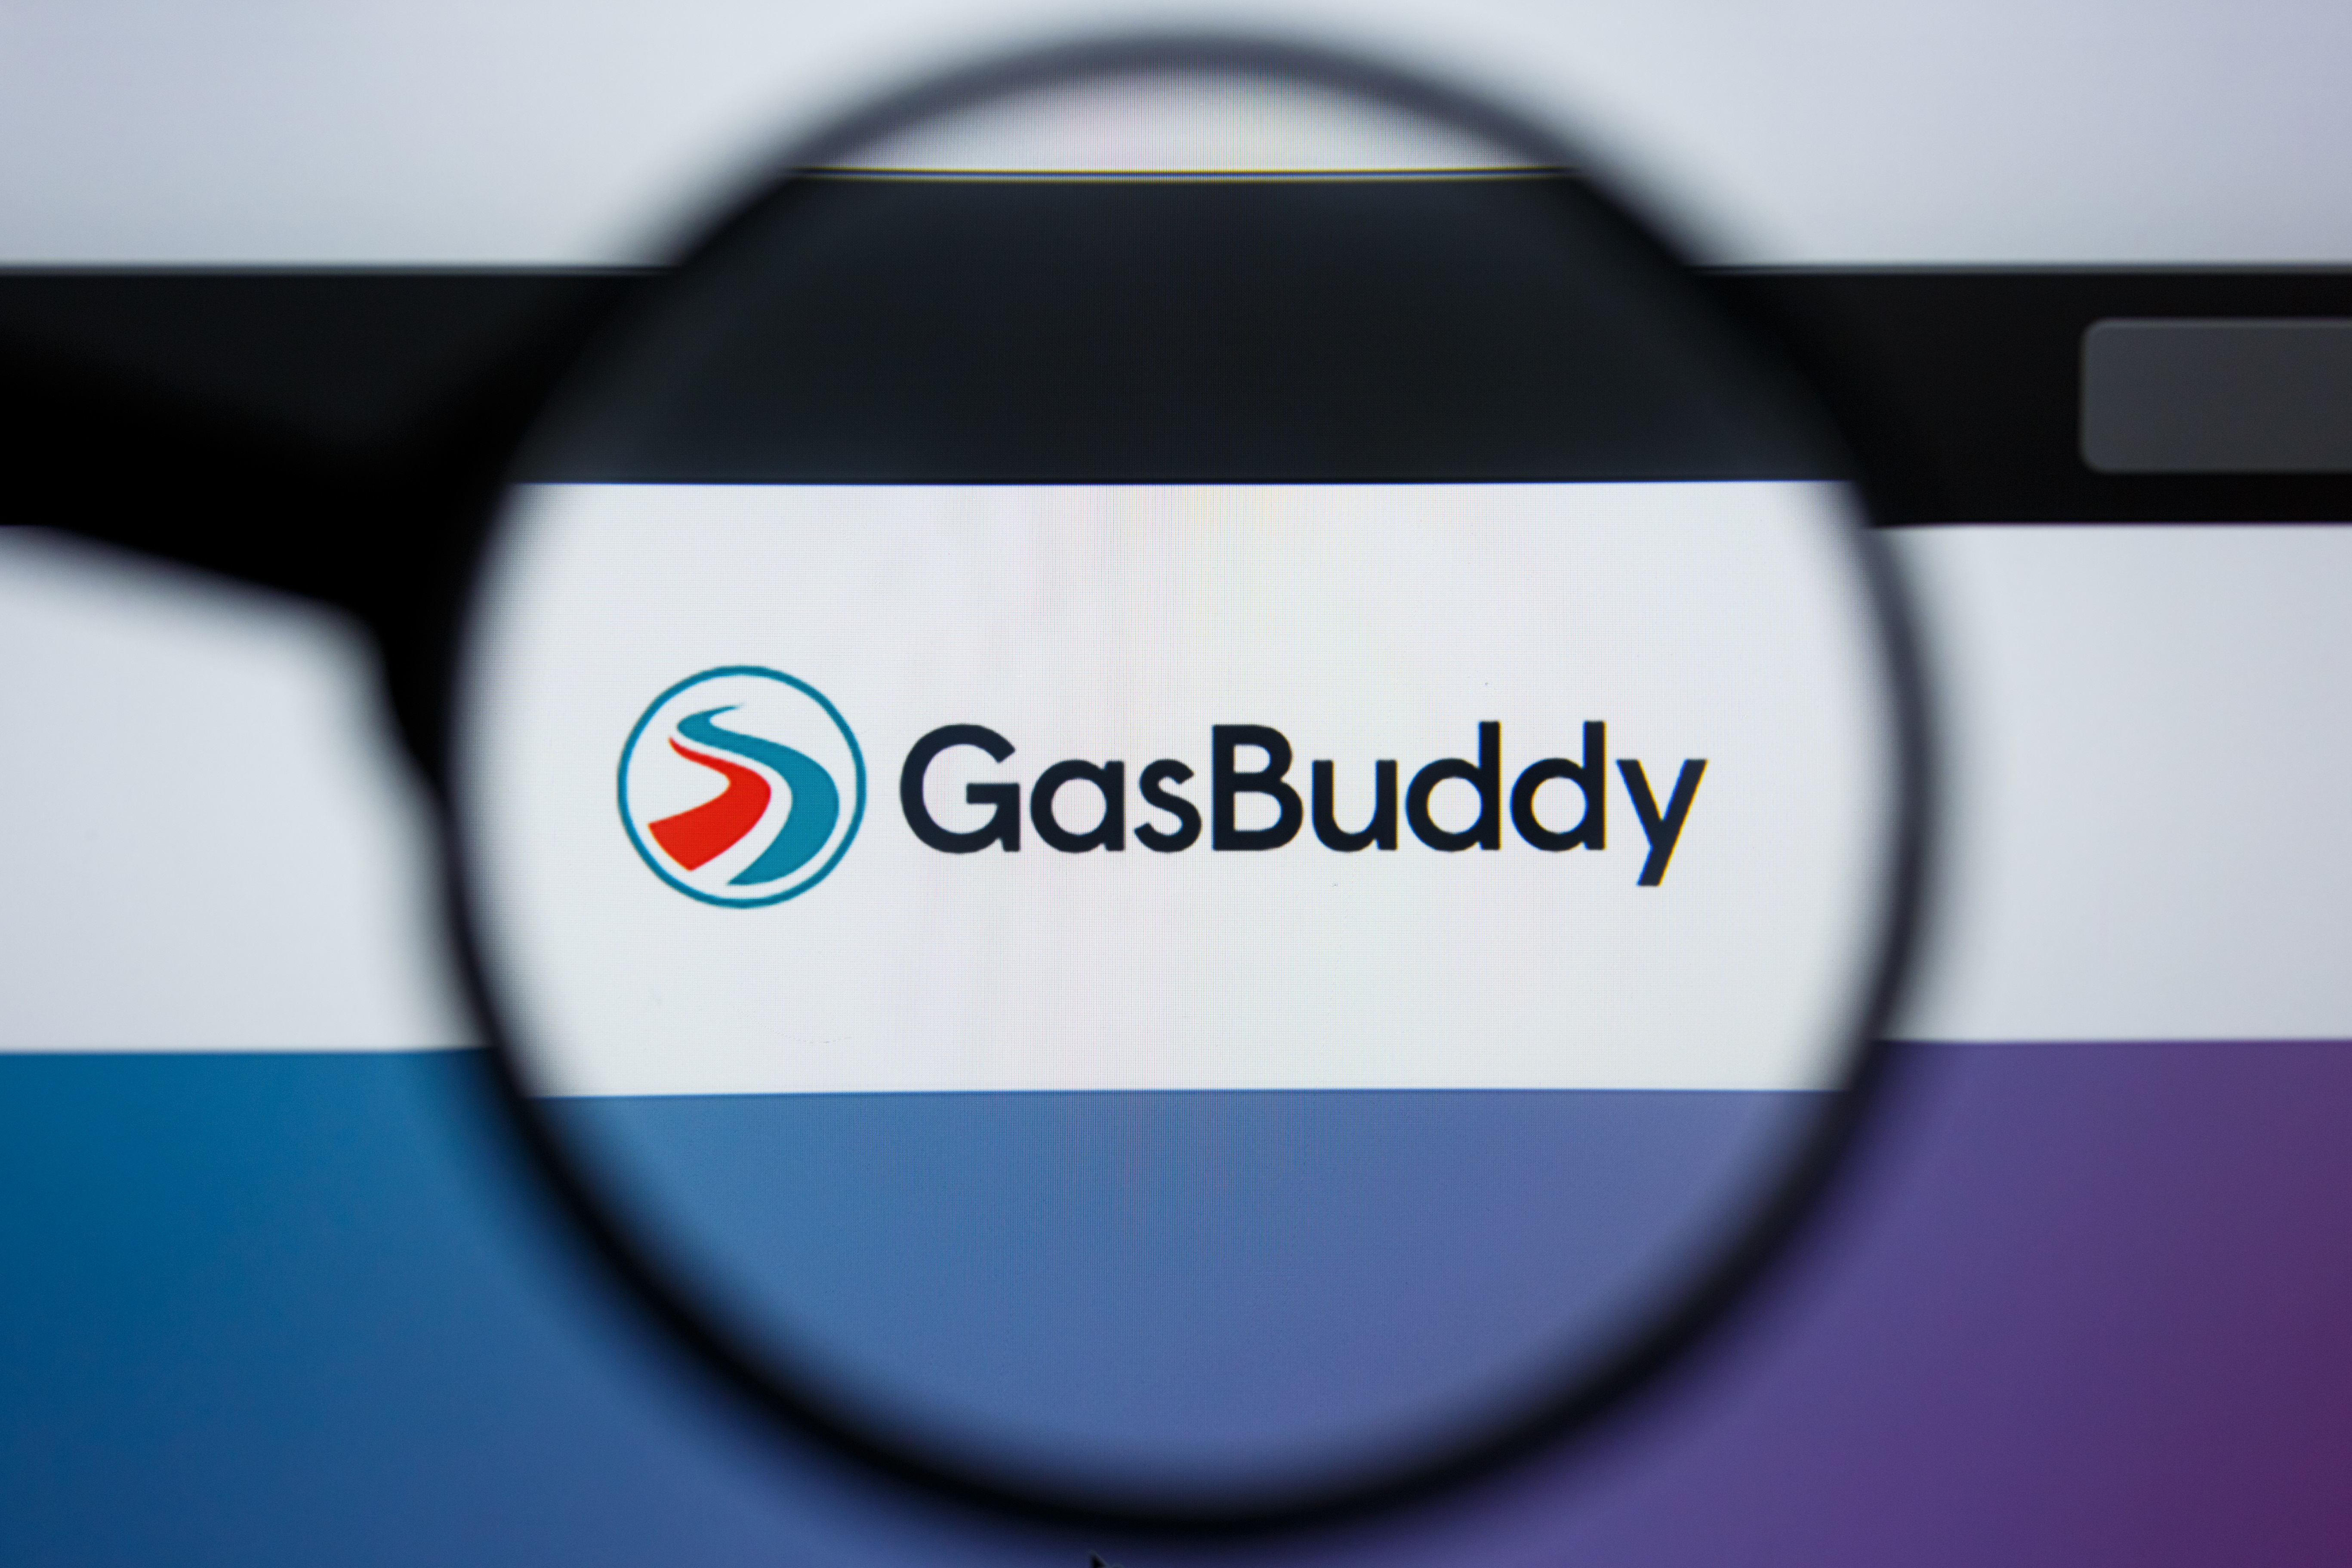 gasbuddy on computer screen